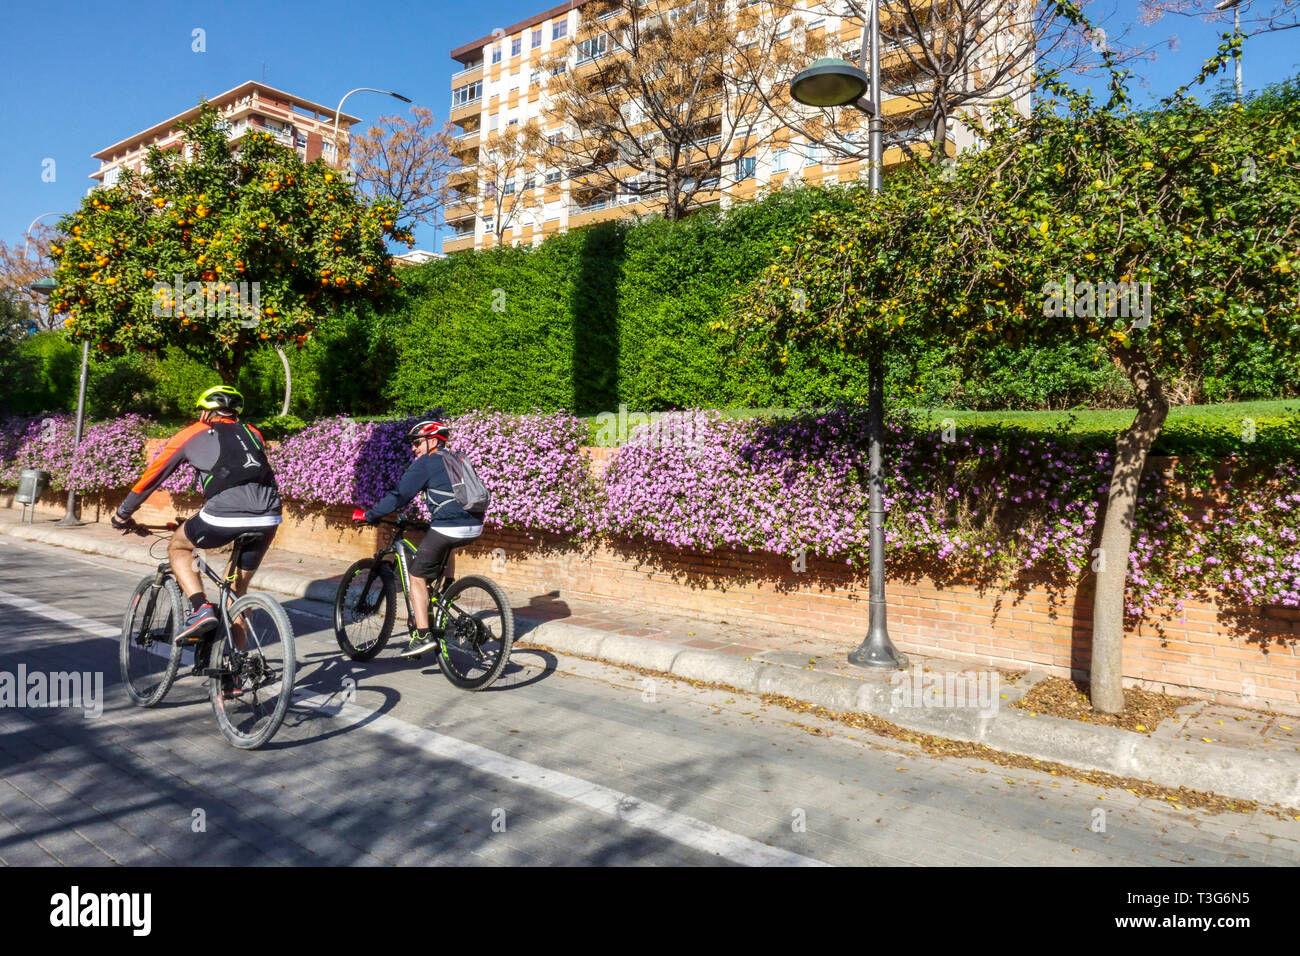 Valencia Turia Gärten, Radfahrer fahren auf Radweg, Spanien Fahrradstadt Europa Radweg Jardín del Turia Stockfoto